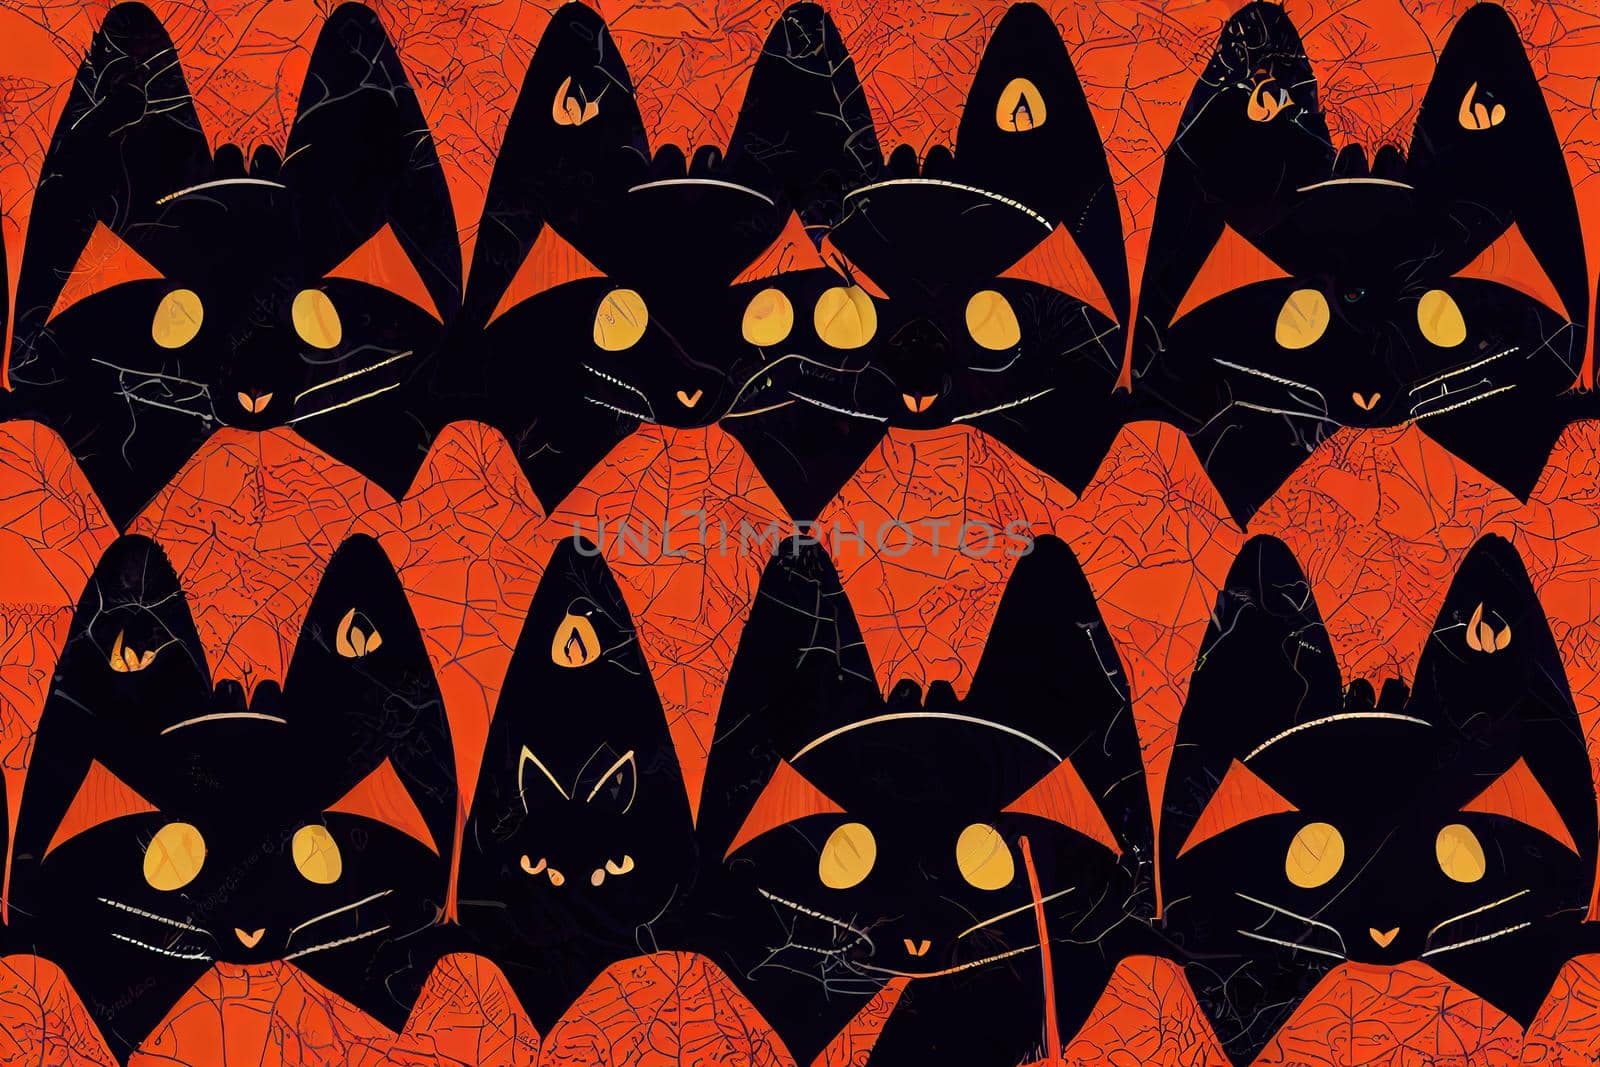 Black Cat and Spooky Halloween Pumpkin Pattern